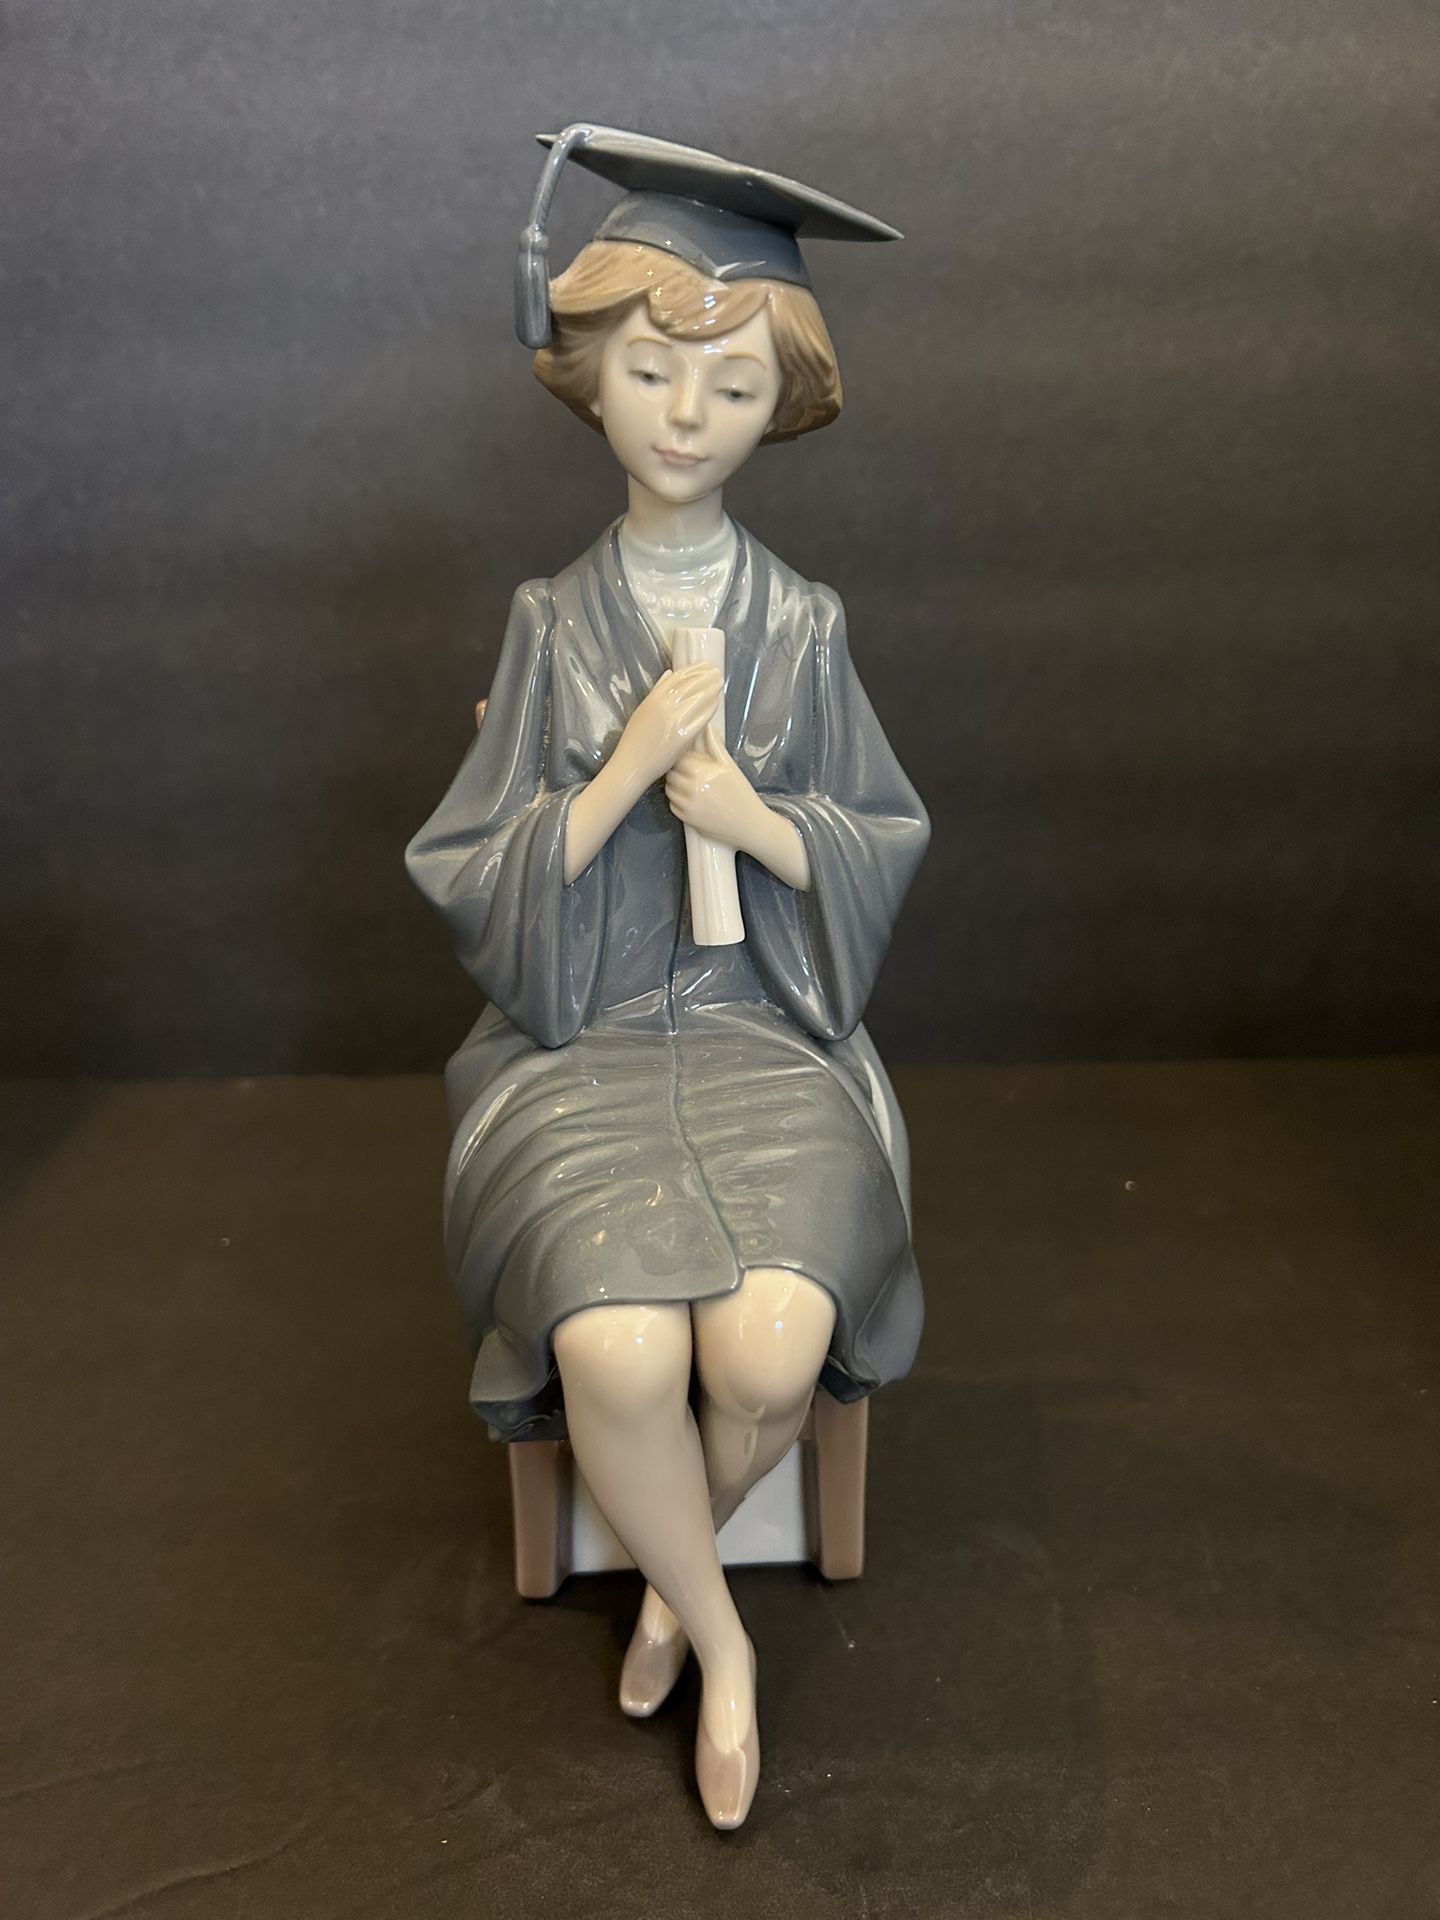 Graduate Girl Porcelain Figurine - Lladro